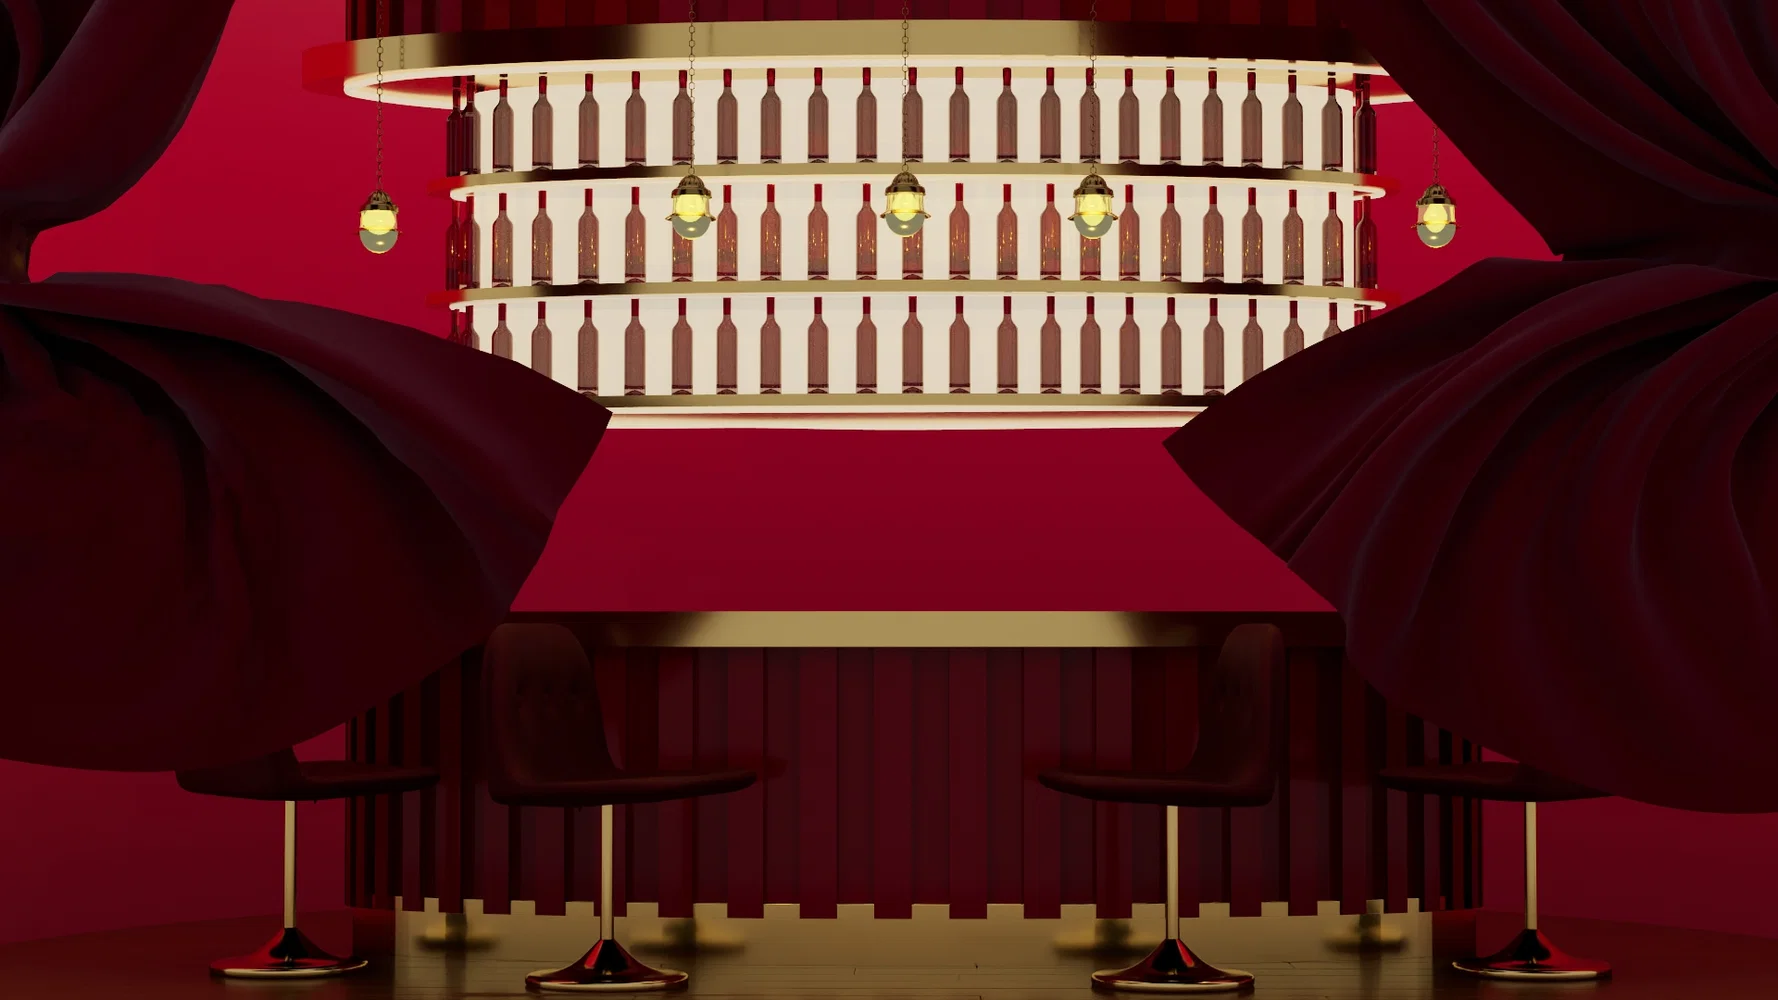 3D Bar Set Design for a Cherry Vodka Commercial Project